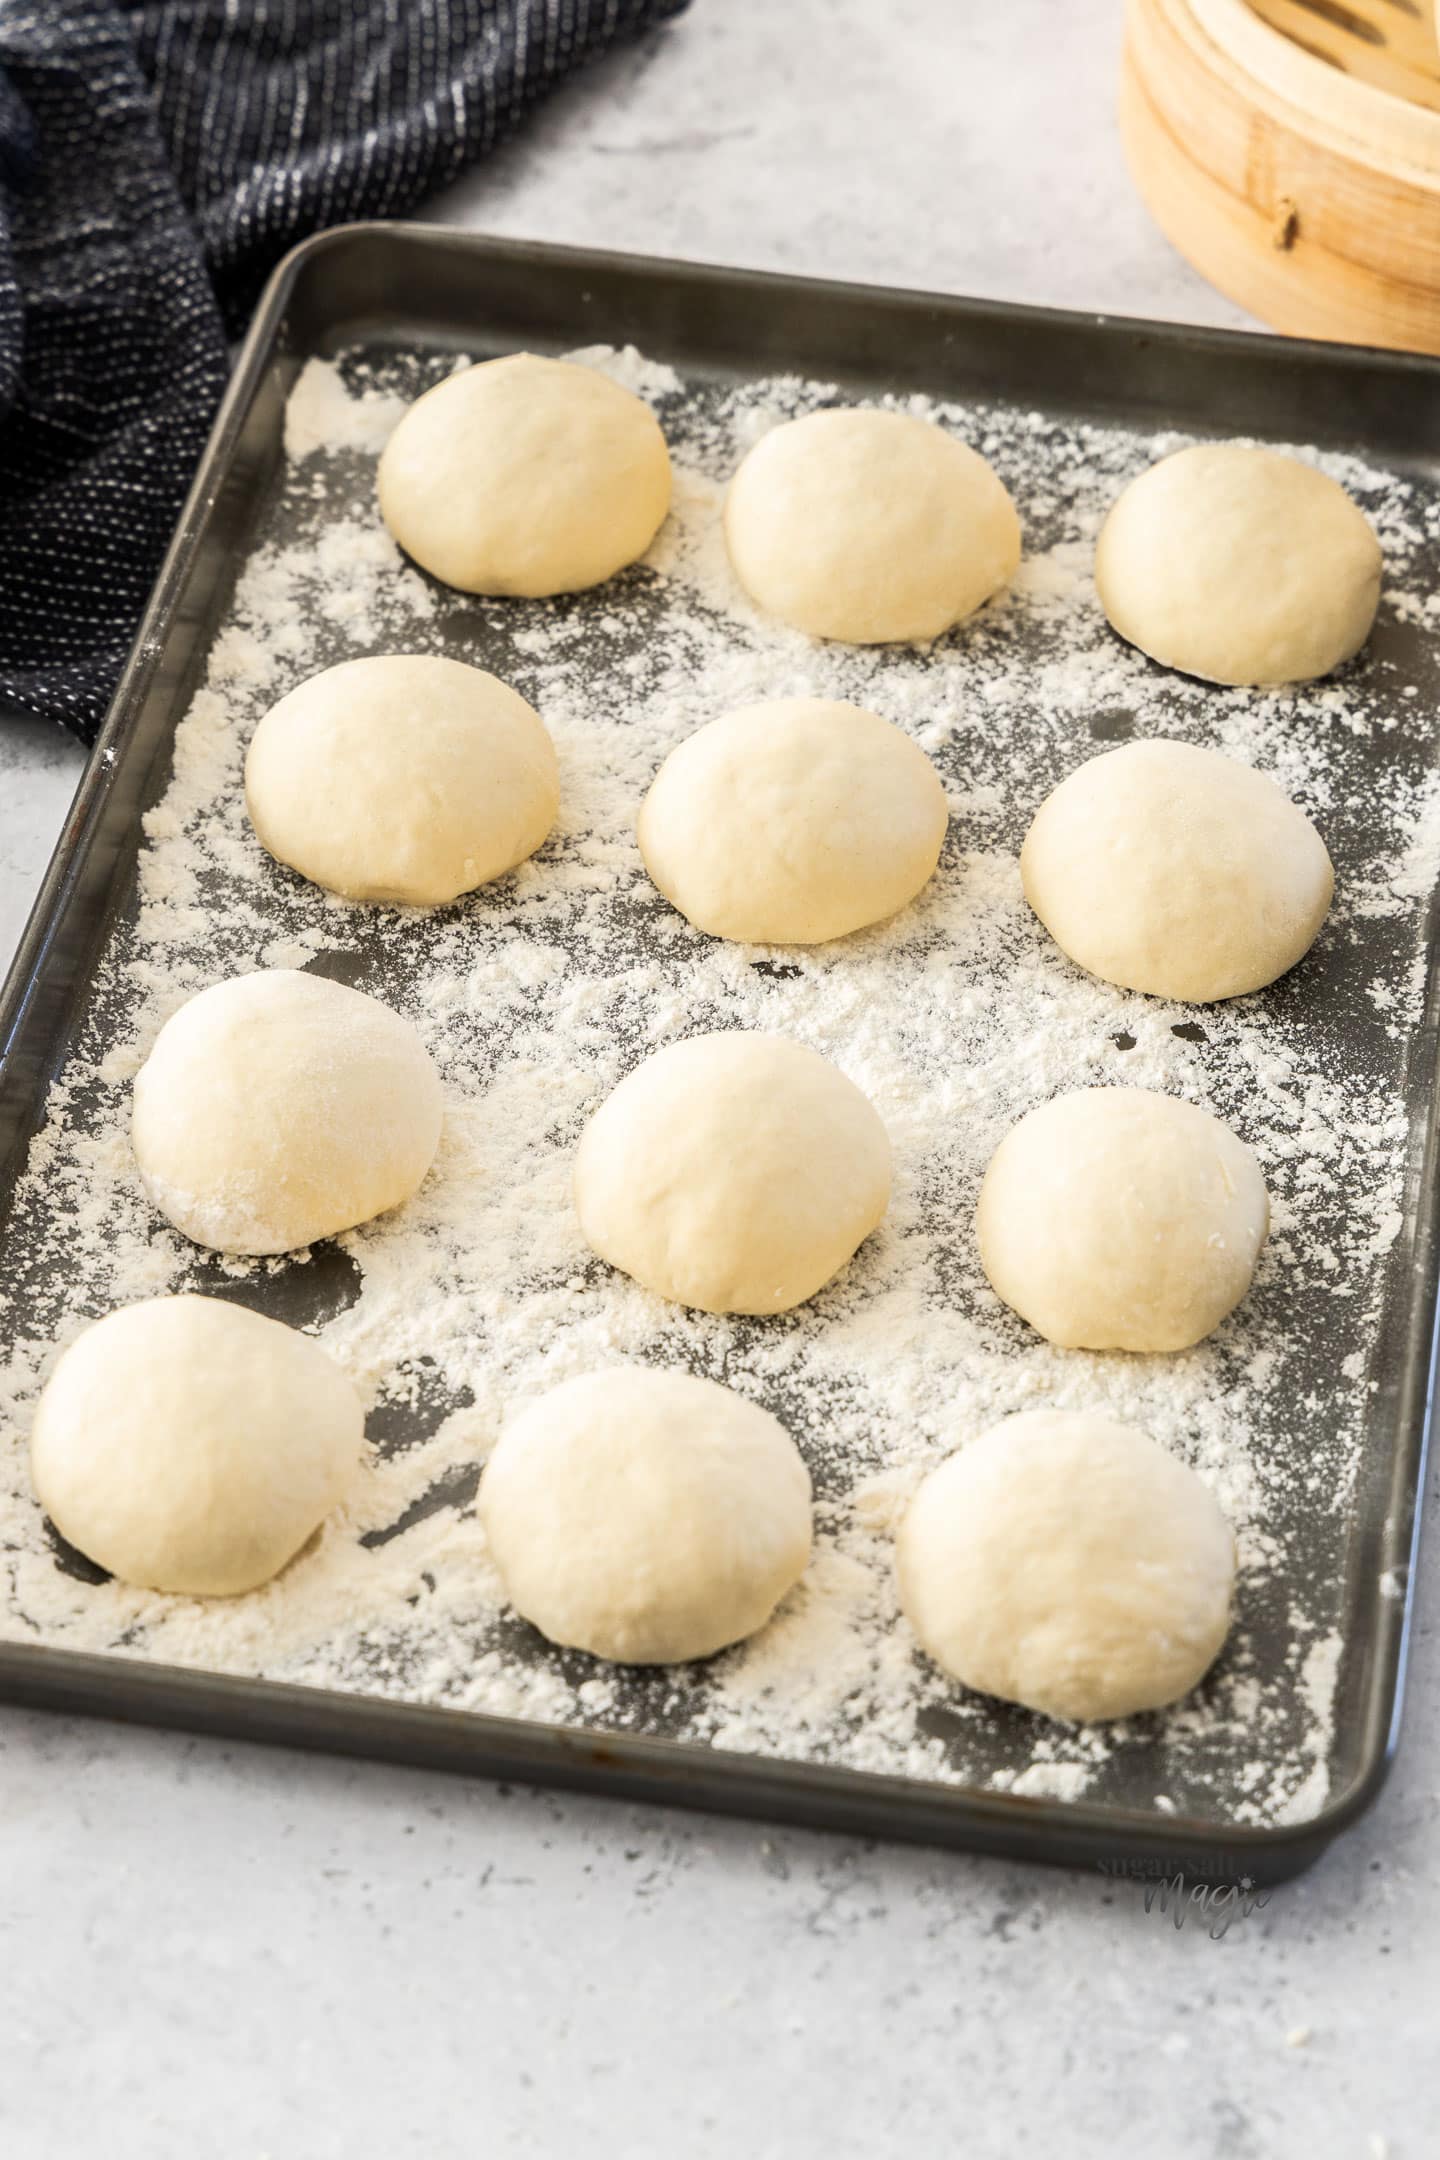 12 small balls of dough on a floured baking tray.